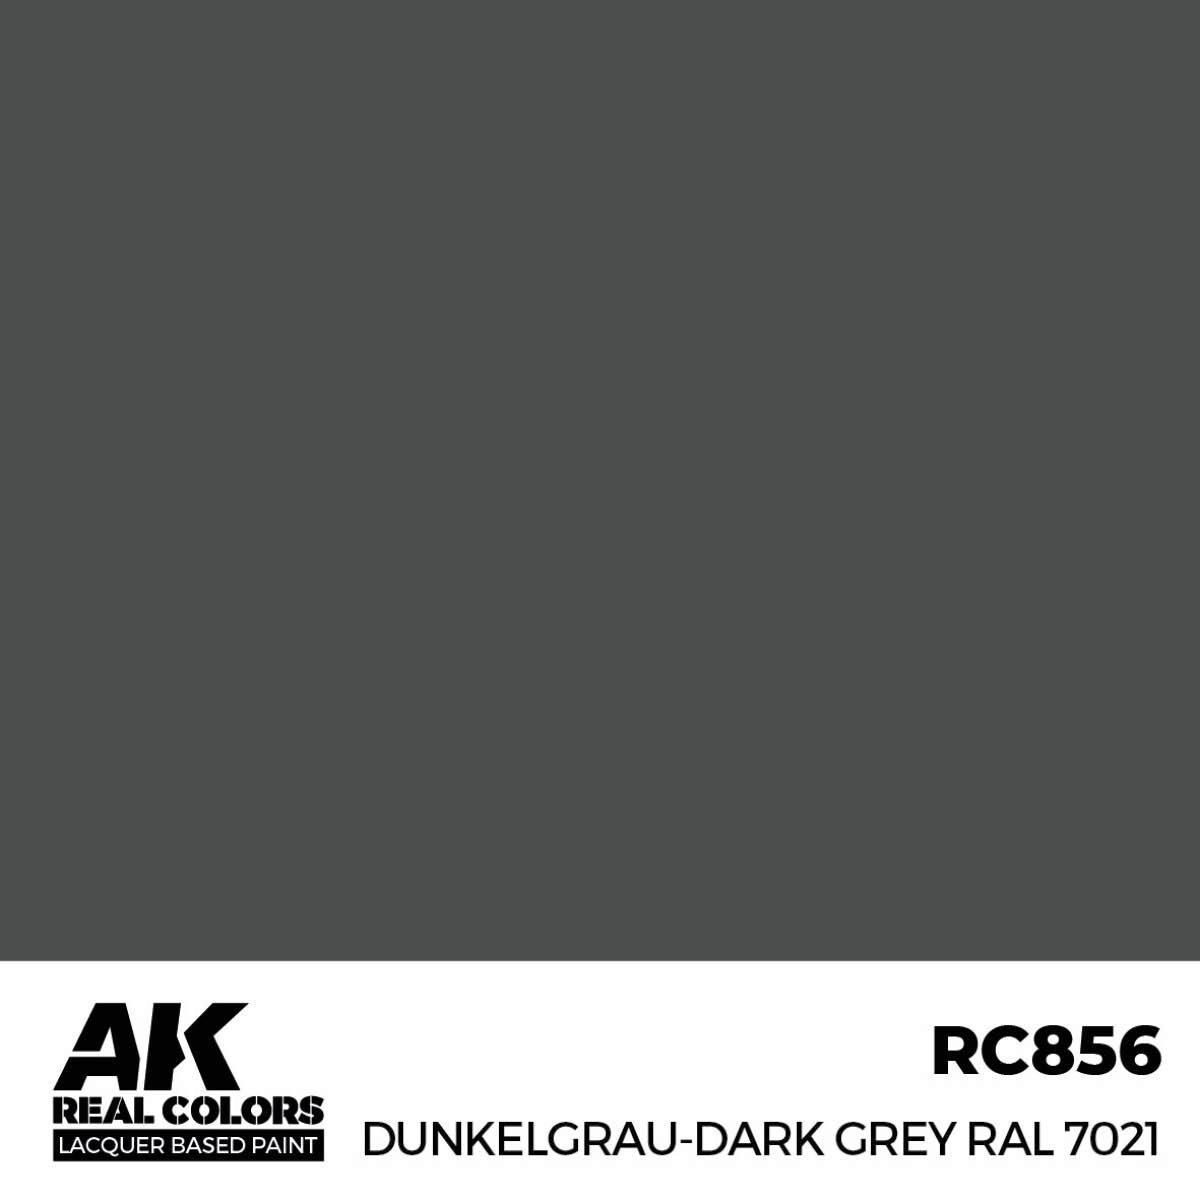 AK RC856 Real Colors Dunkelgrau-Dark Grey RAL 7021 17 ml.